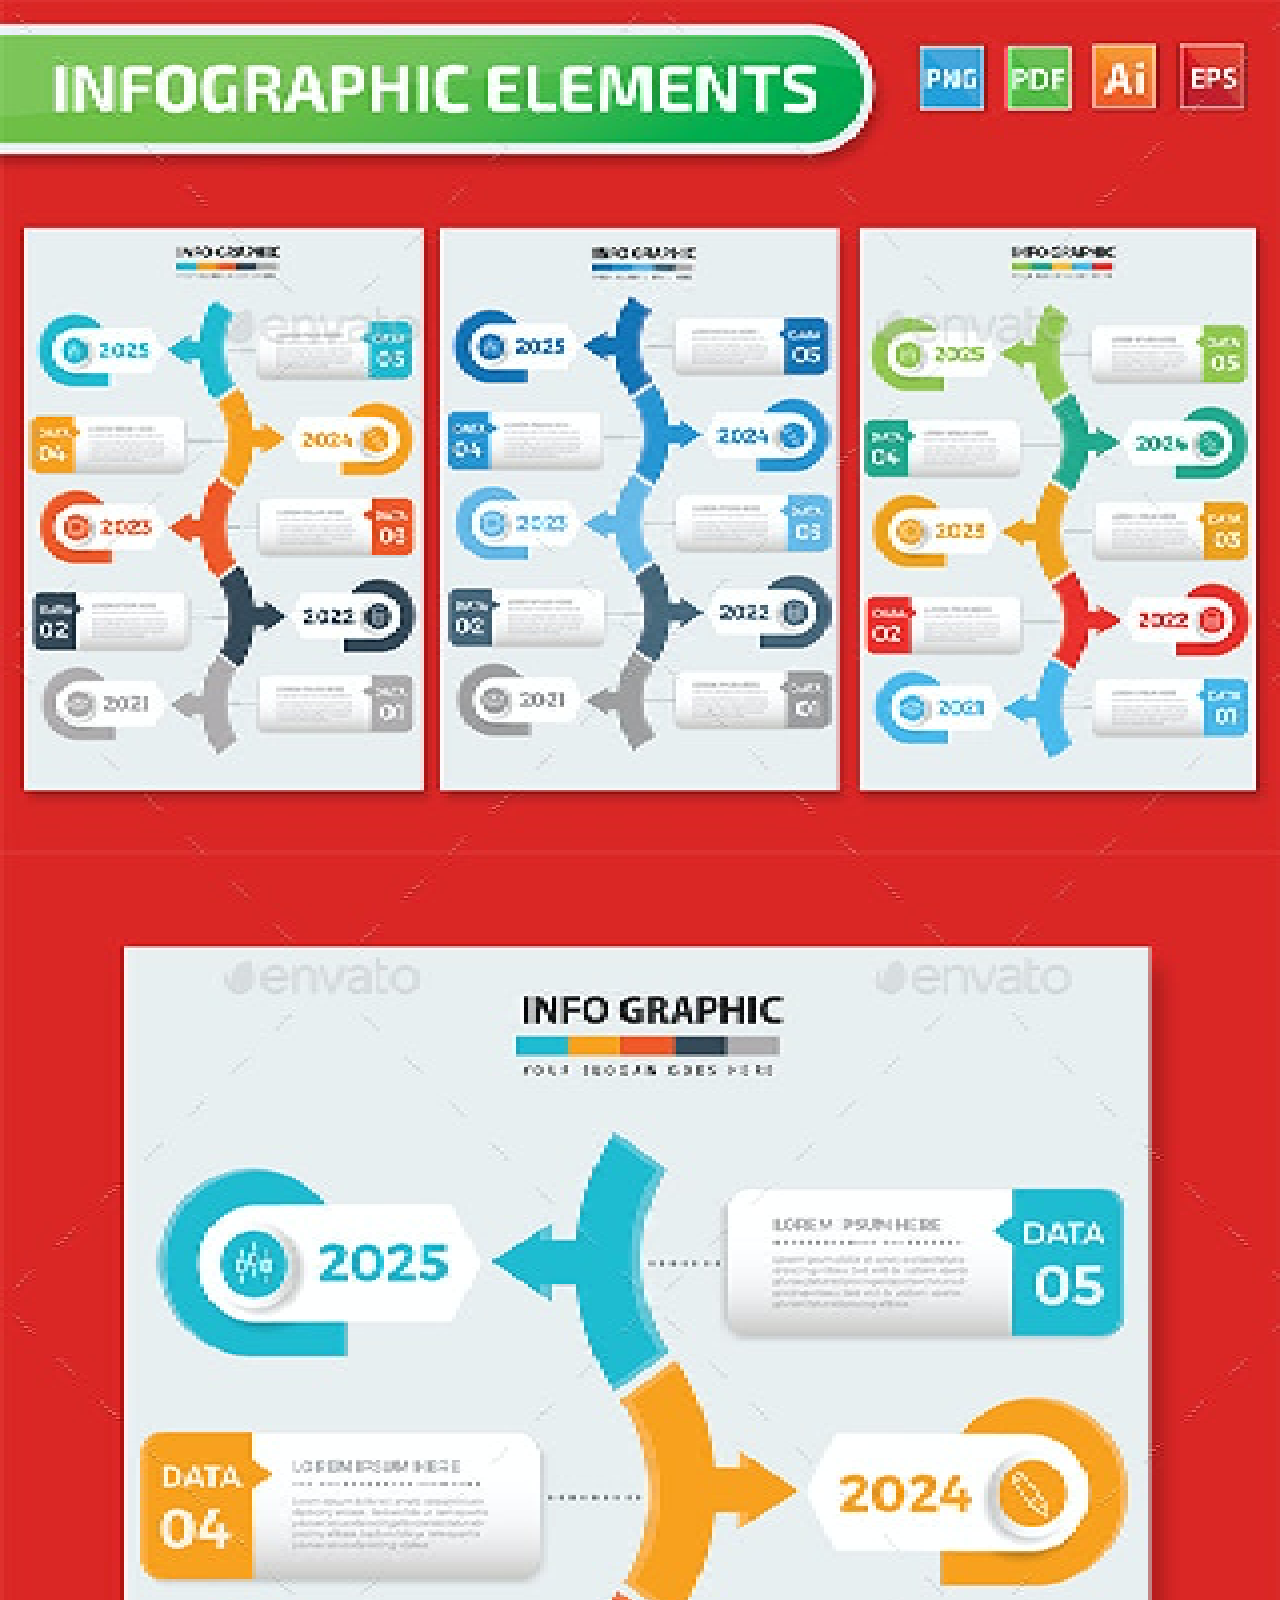 Timeline infographics design pinterest image preview.